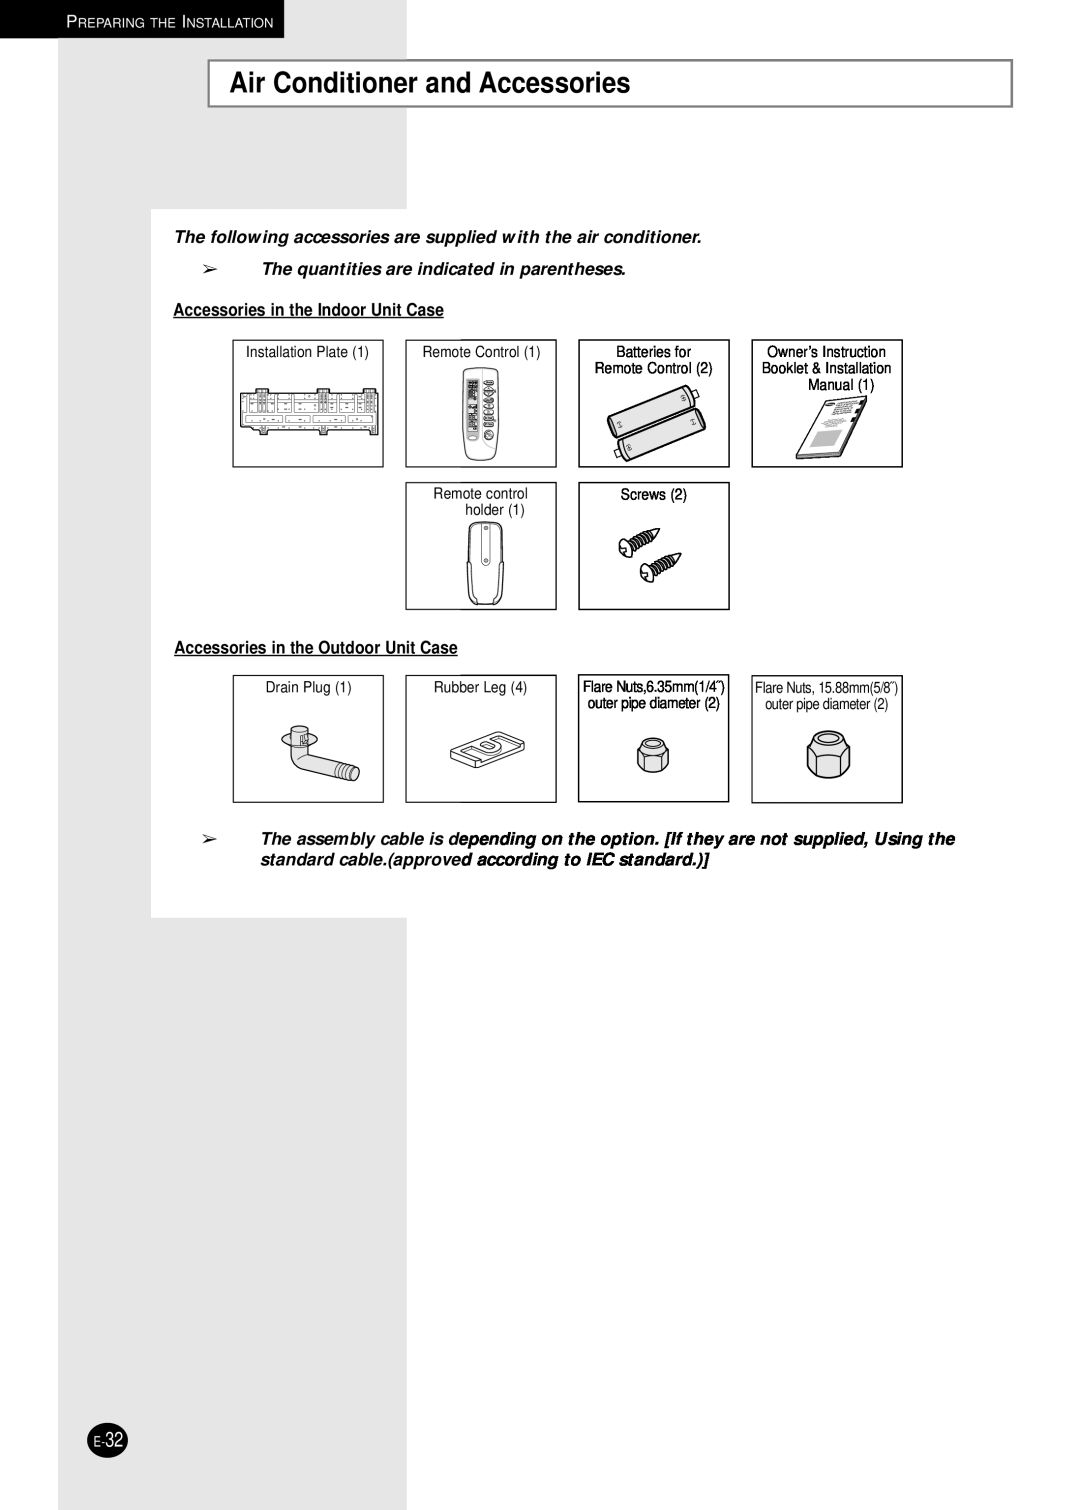 Samsung AQ30C1(2)BC installation manual Air Conditioner and Accessories, Accessories in the Indoor Unit Case 